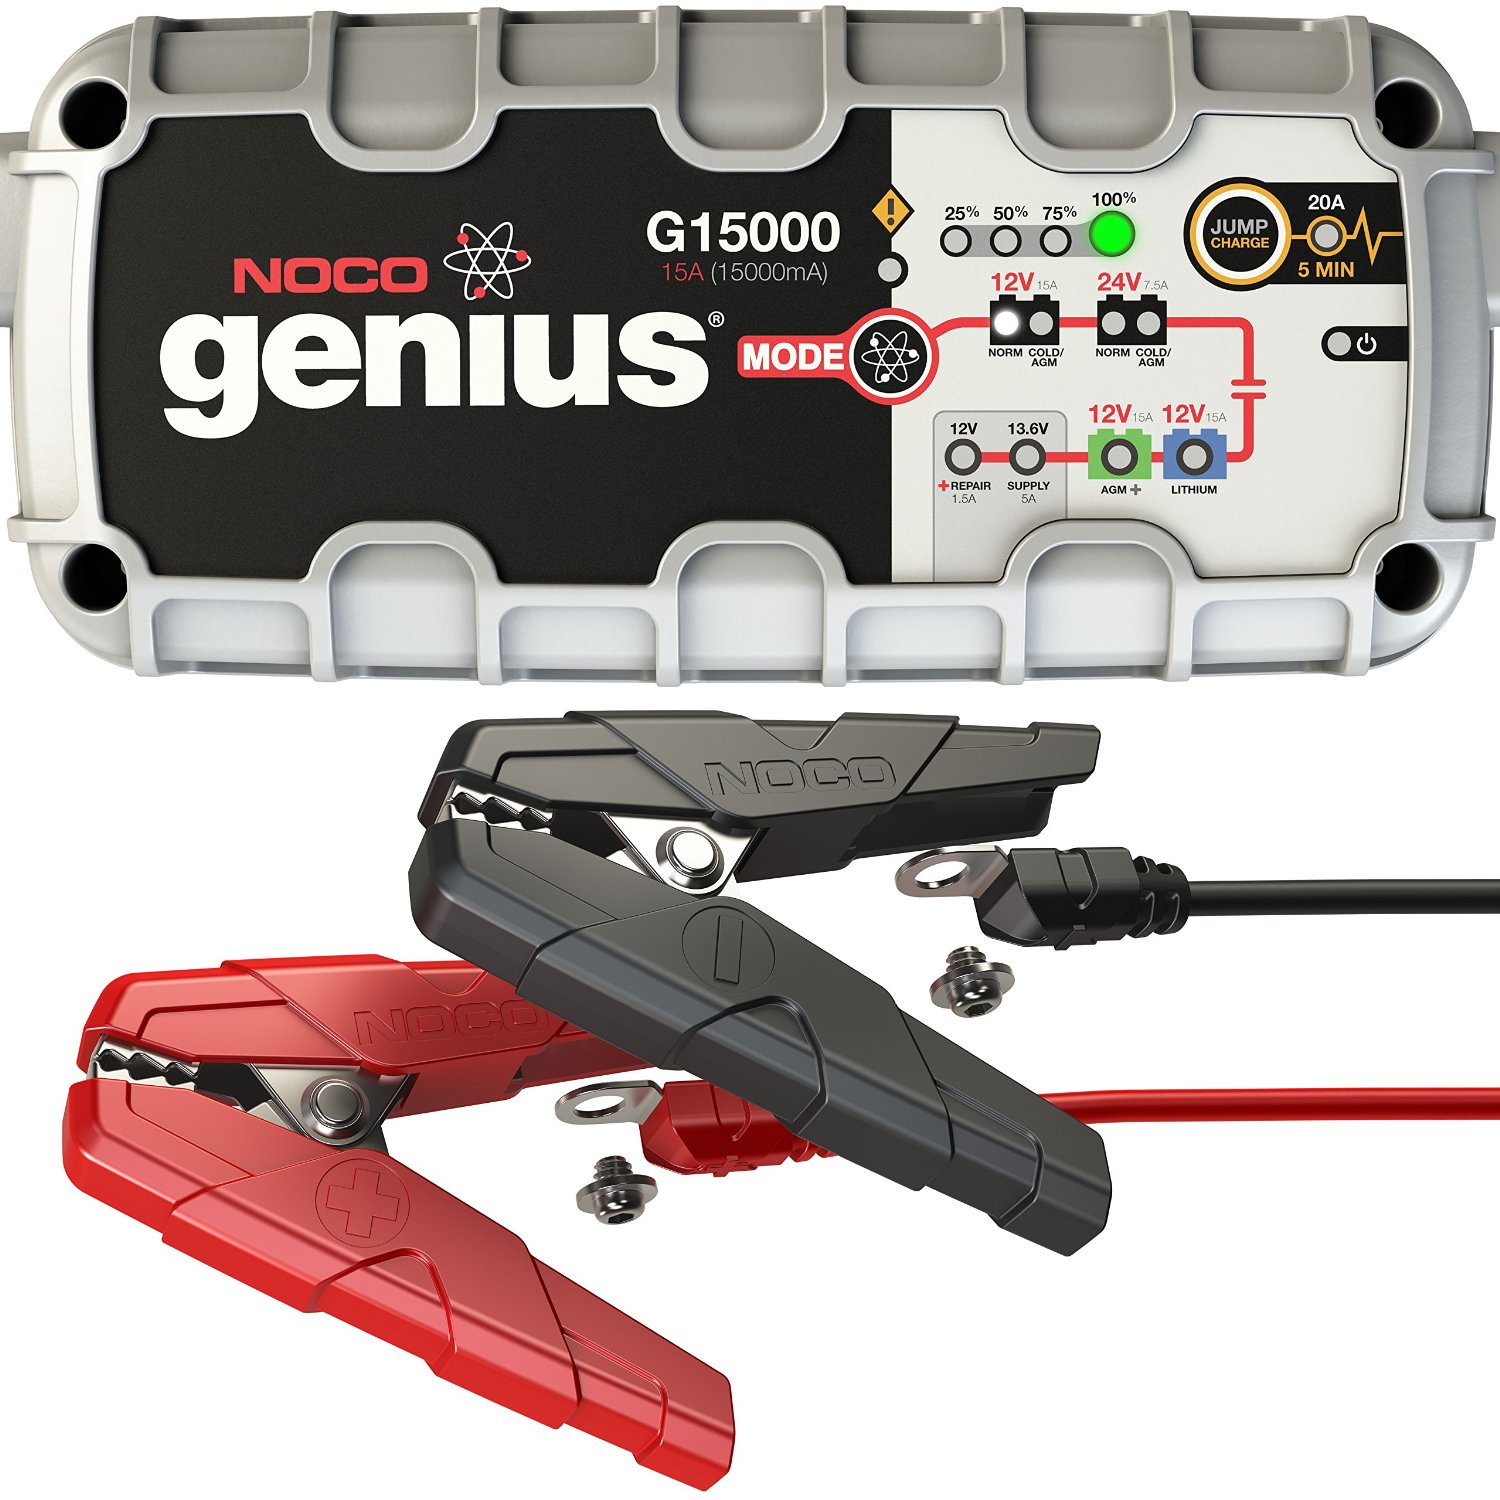 NOCO Genius G15000 Multi-Purpose Battery Charger, NOCO G15000